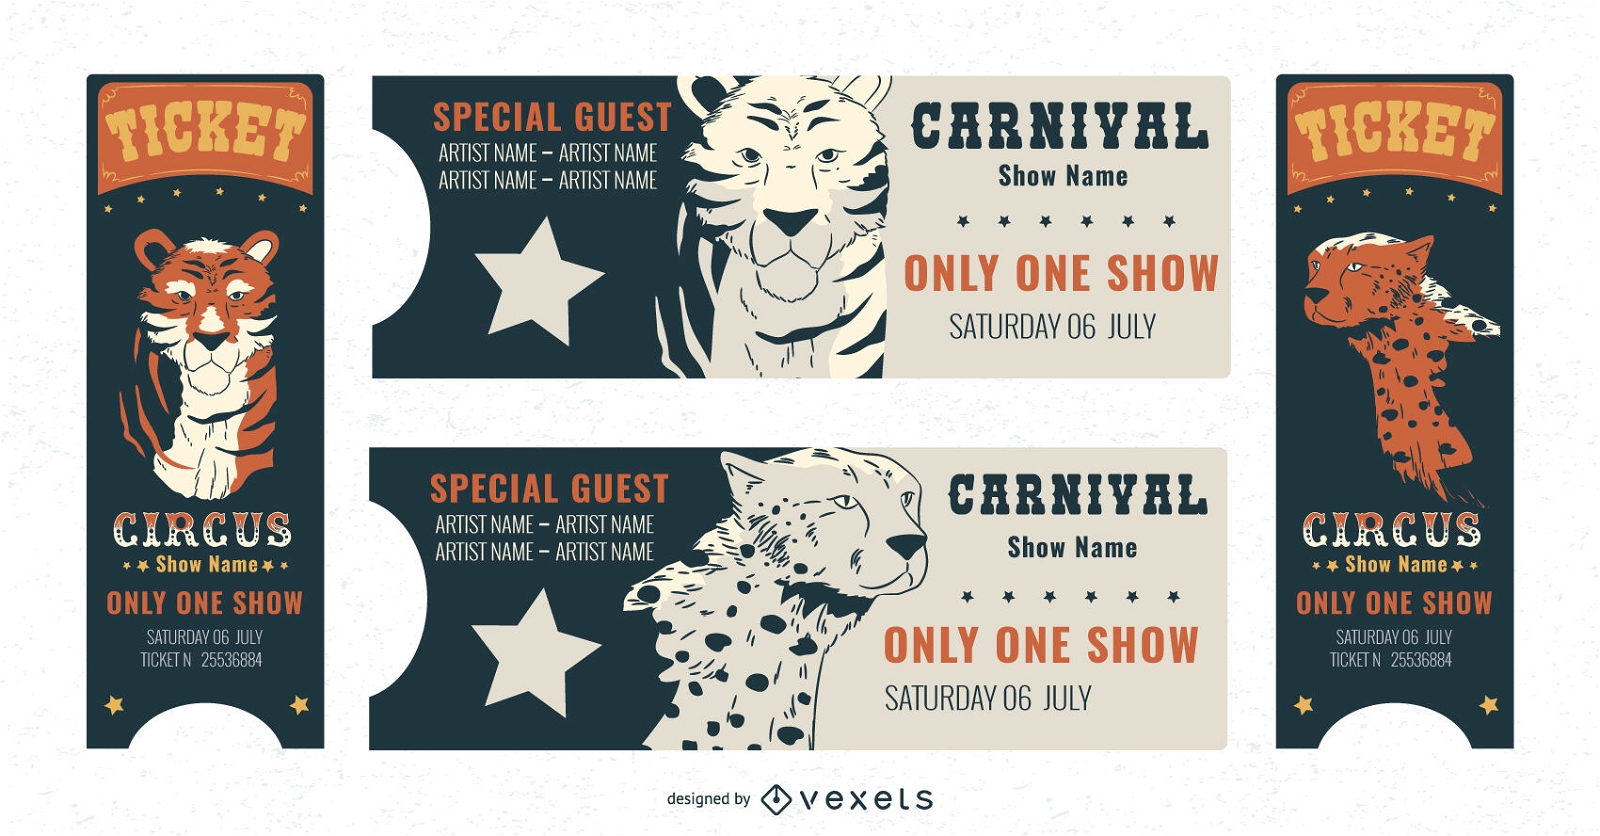 carnival ticket printable